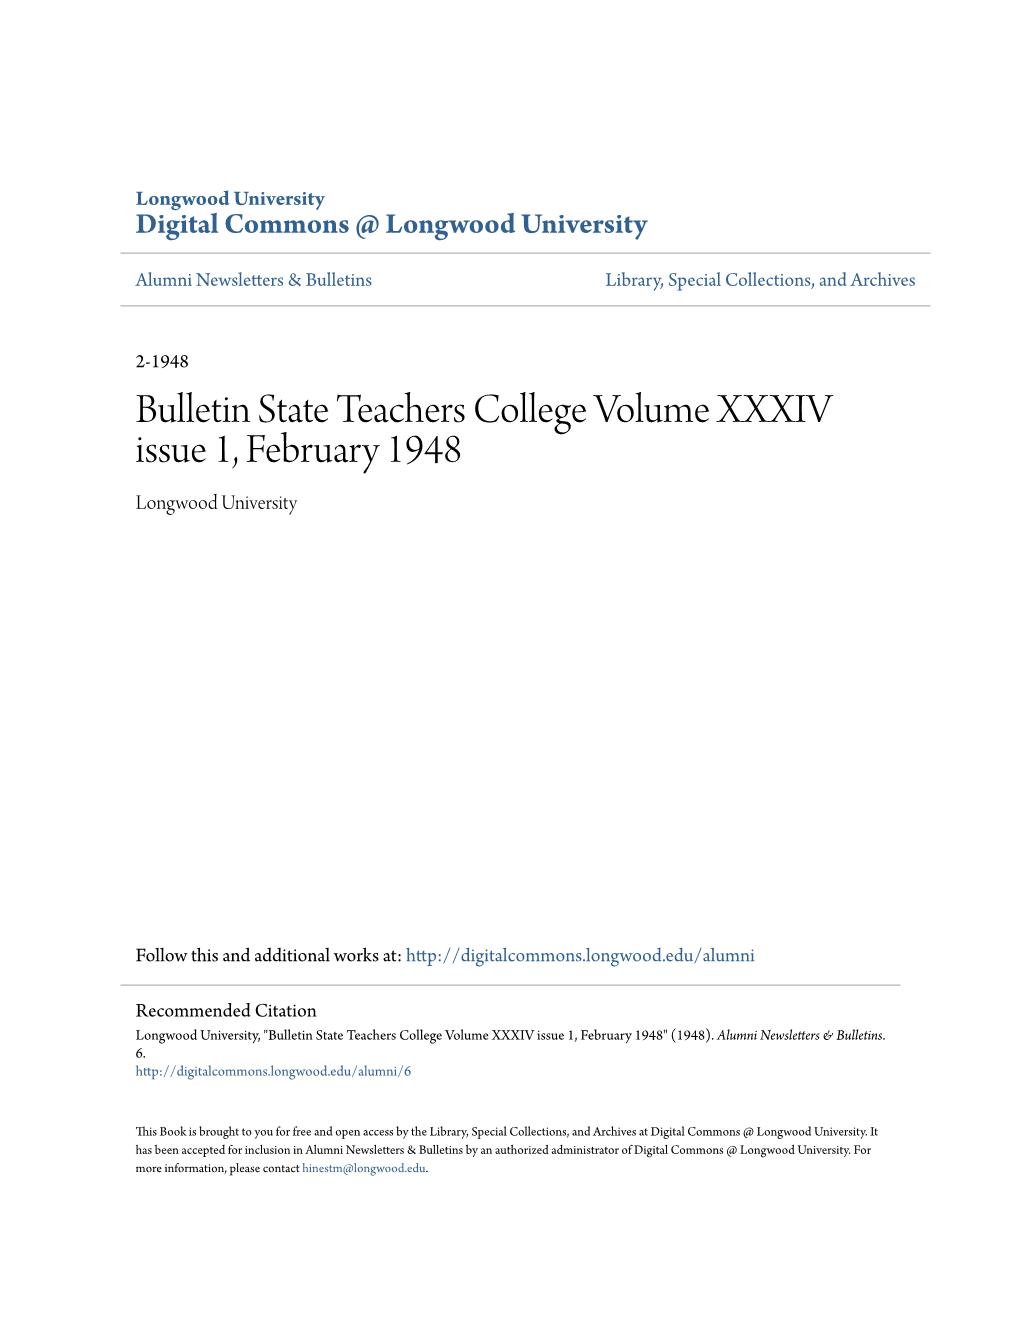 Bulletin State Teachers College Volume XXXIV Issue 1, February 1948 Longwood University